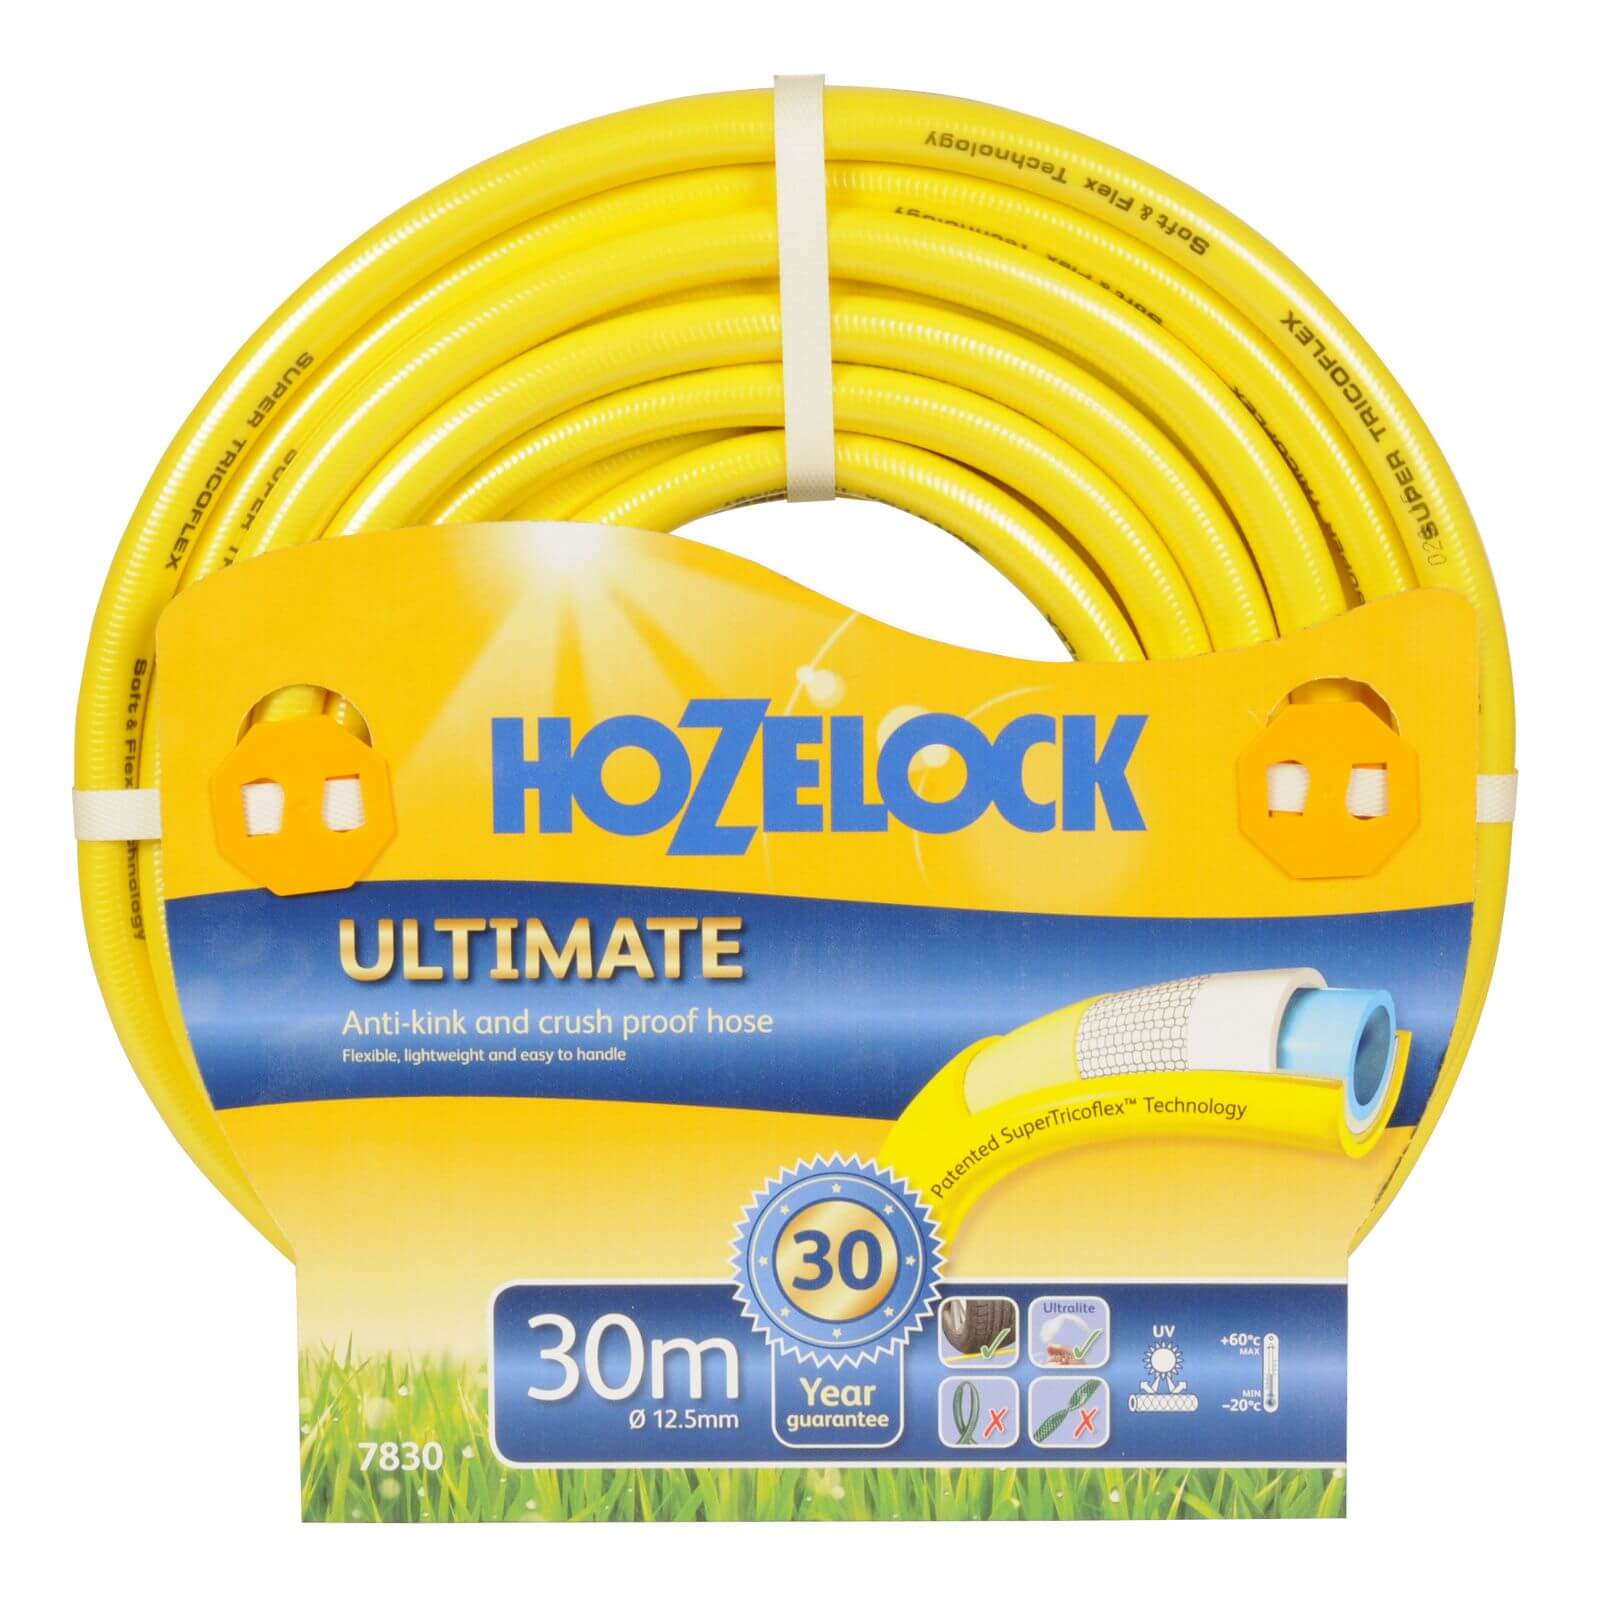 Hozelock Ultimate Hose - 30m